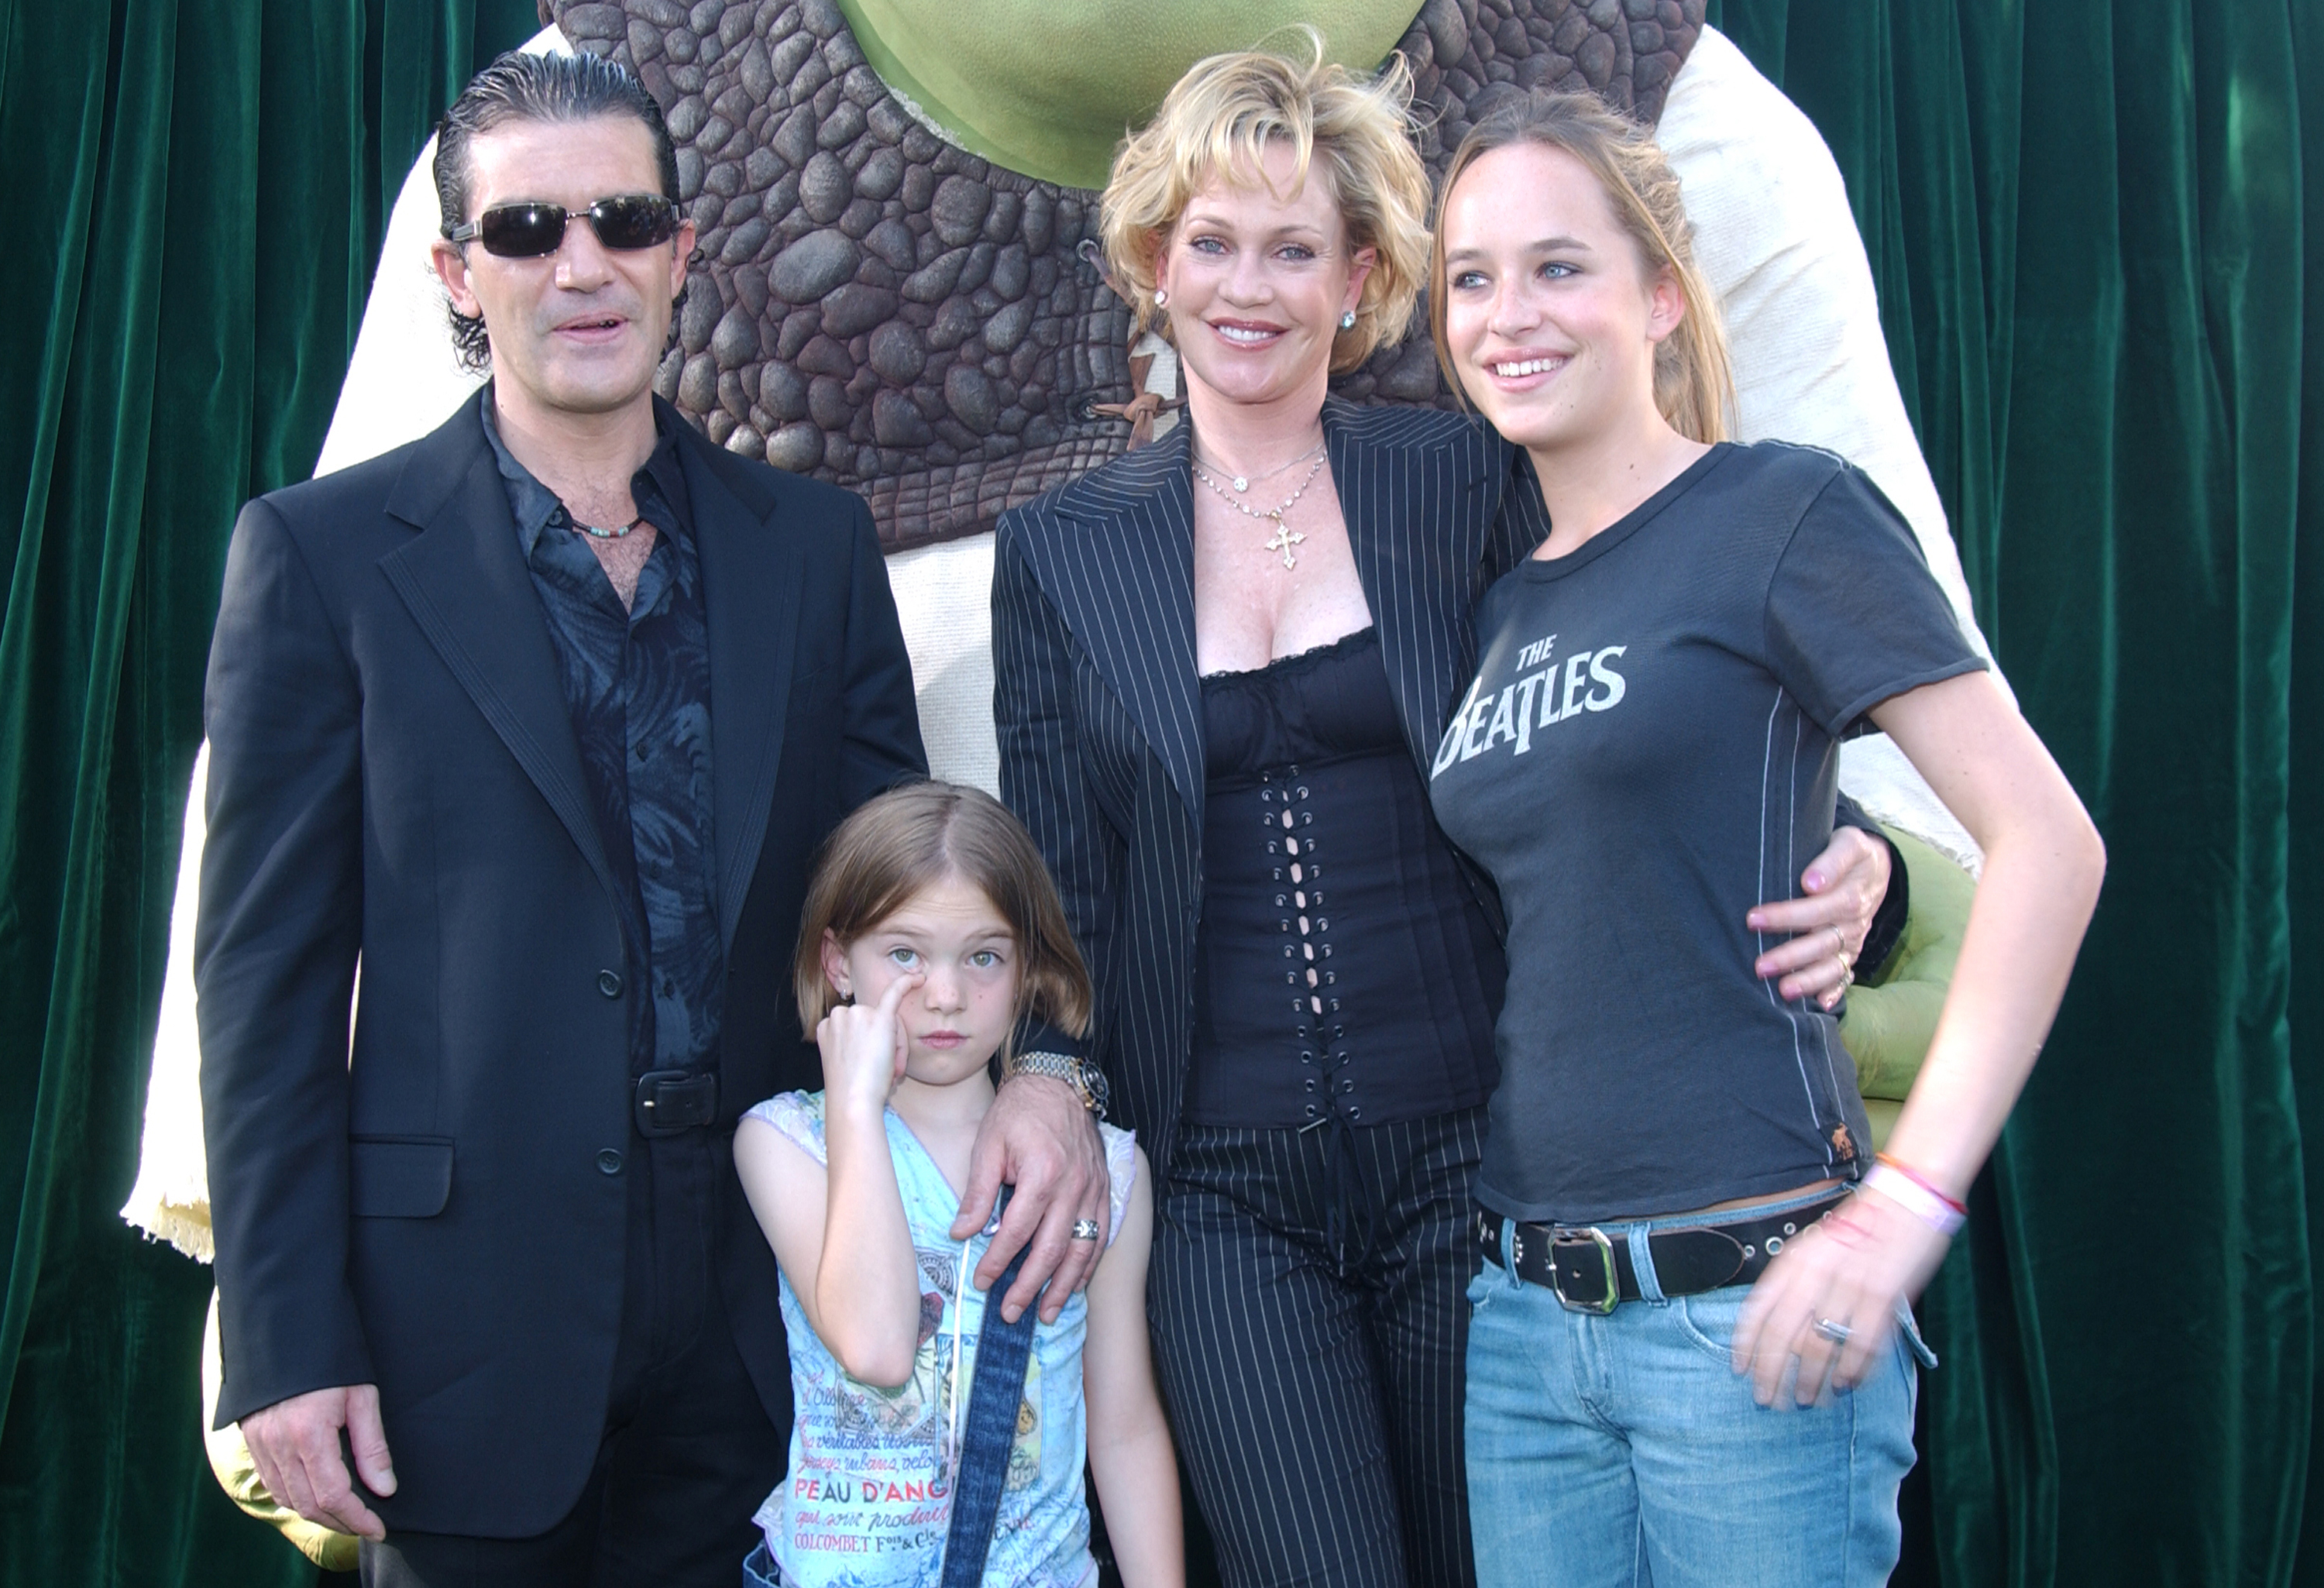 Antonio Banderas, Melanie Griffith, Stella Banderas, and Dakota Johnson at the Los Angeles premiere of "Shrek 2" on May 8, 2004. | Source: Getty Images